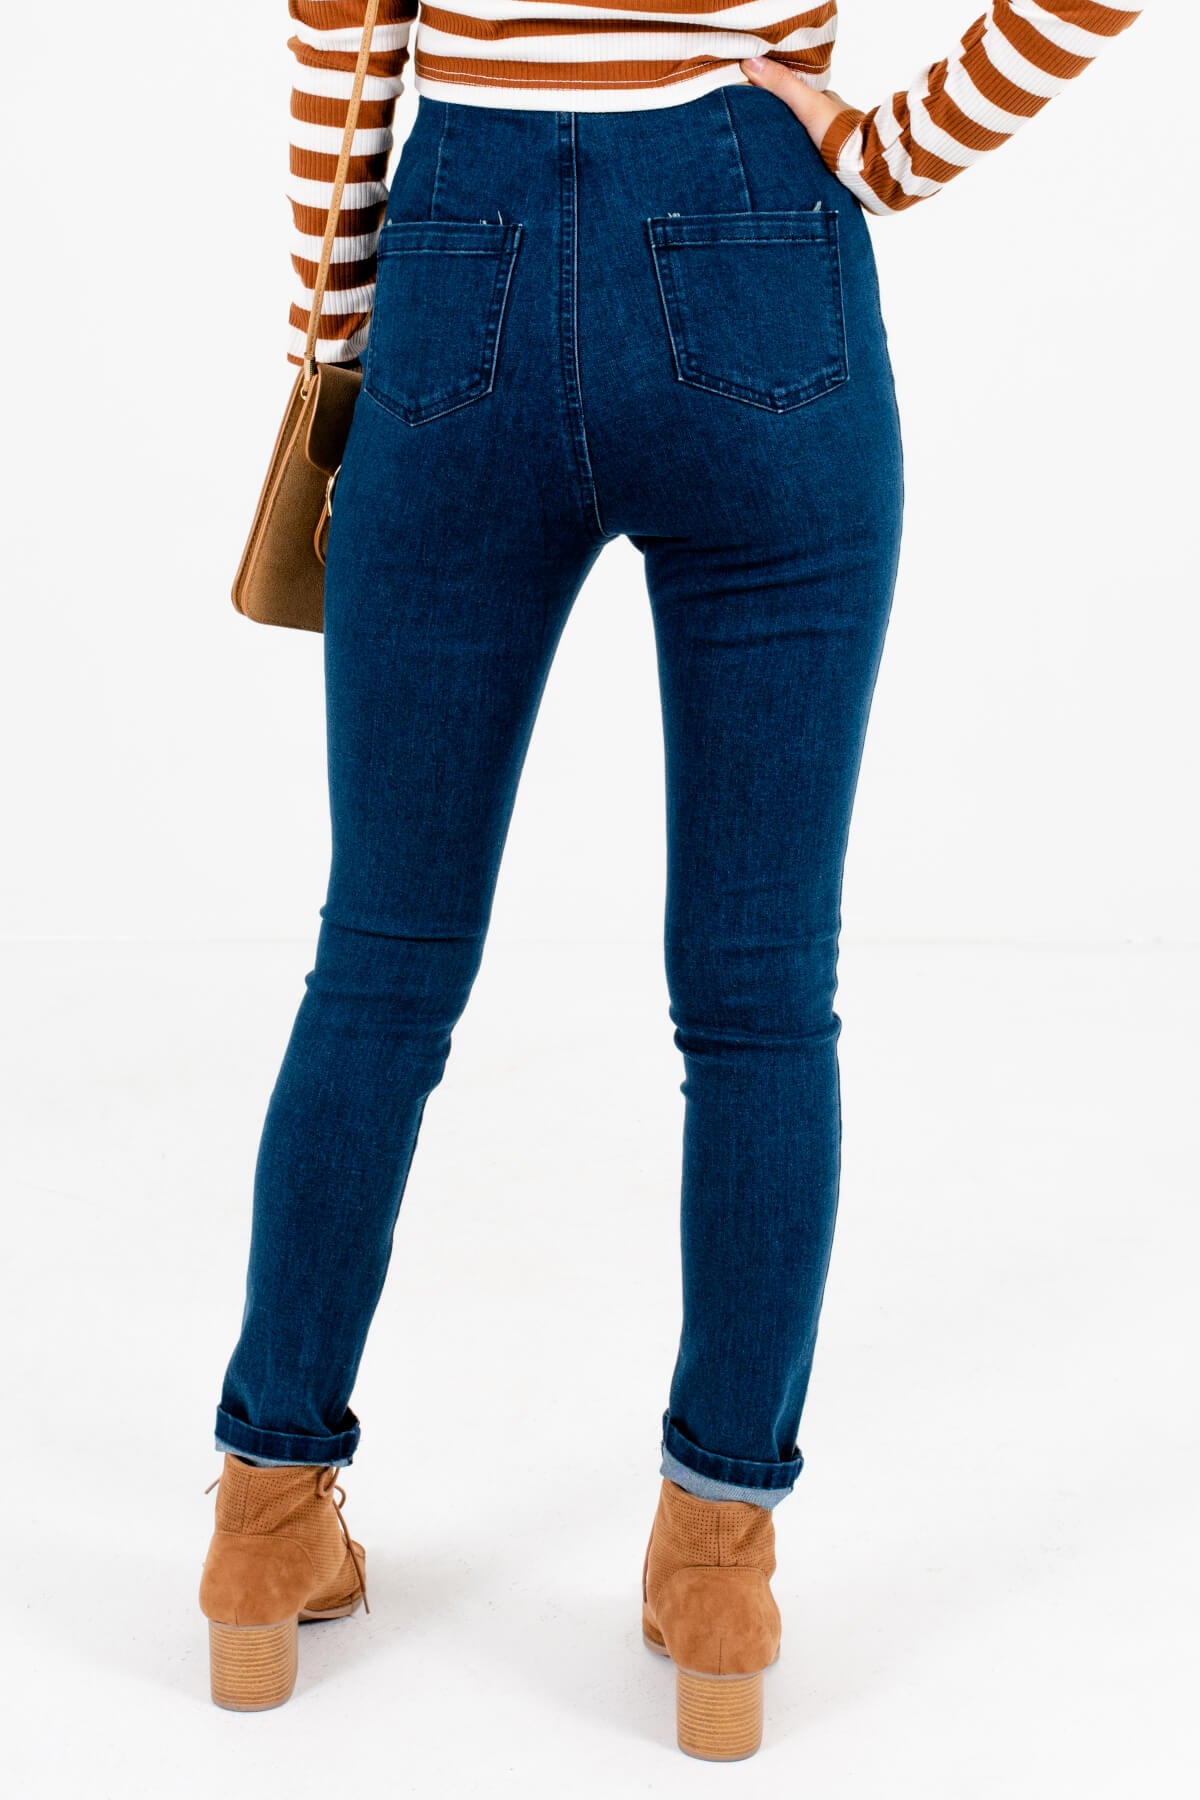 Women's Dark Wash Blue High-Waisted Boutique Jeans 